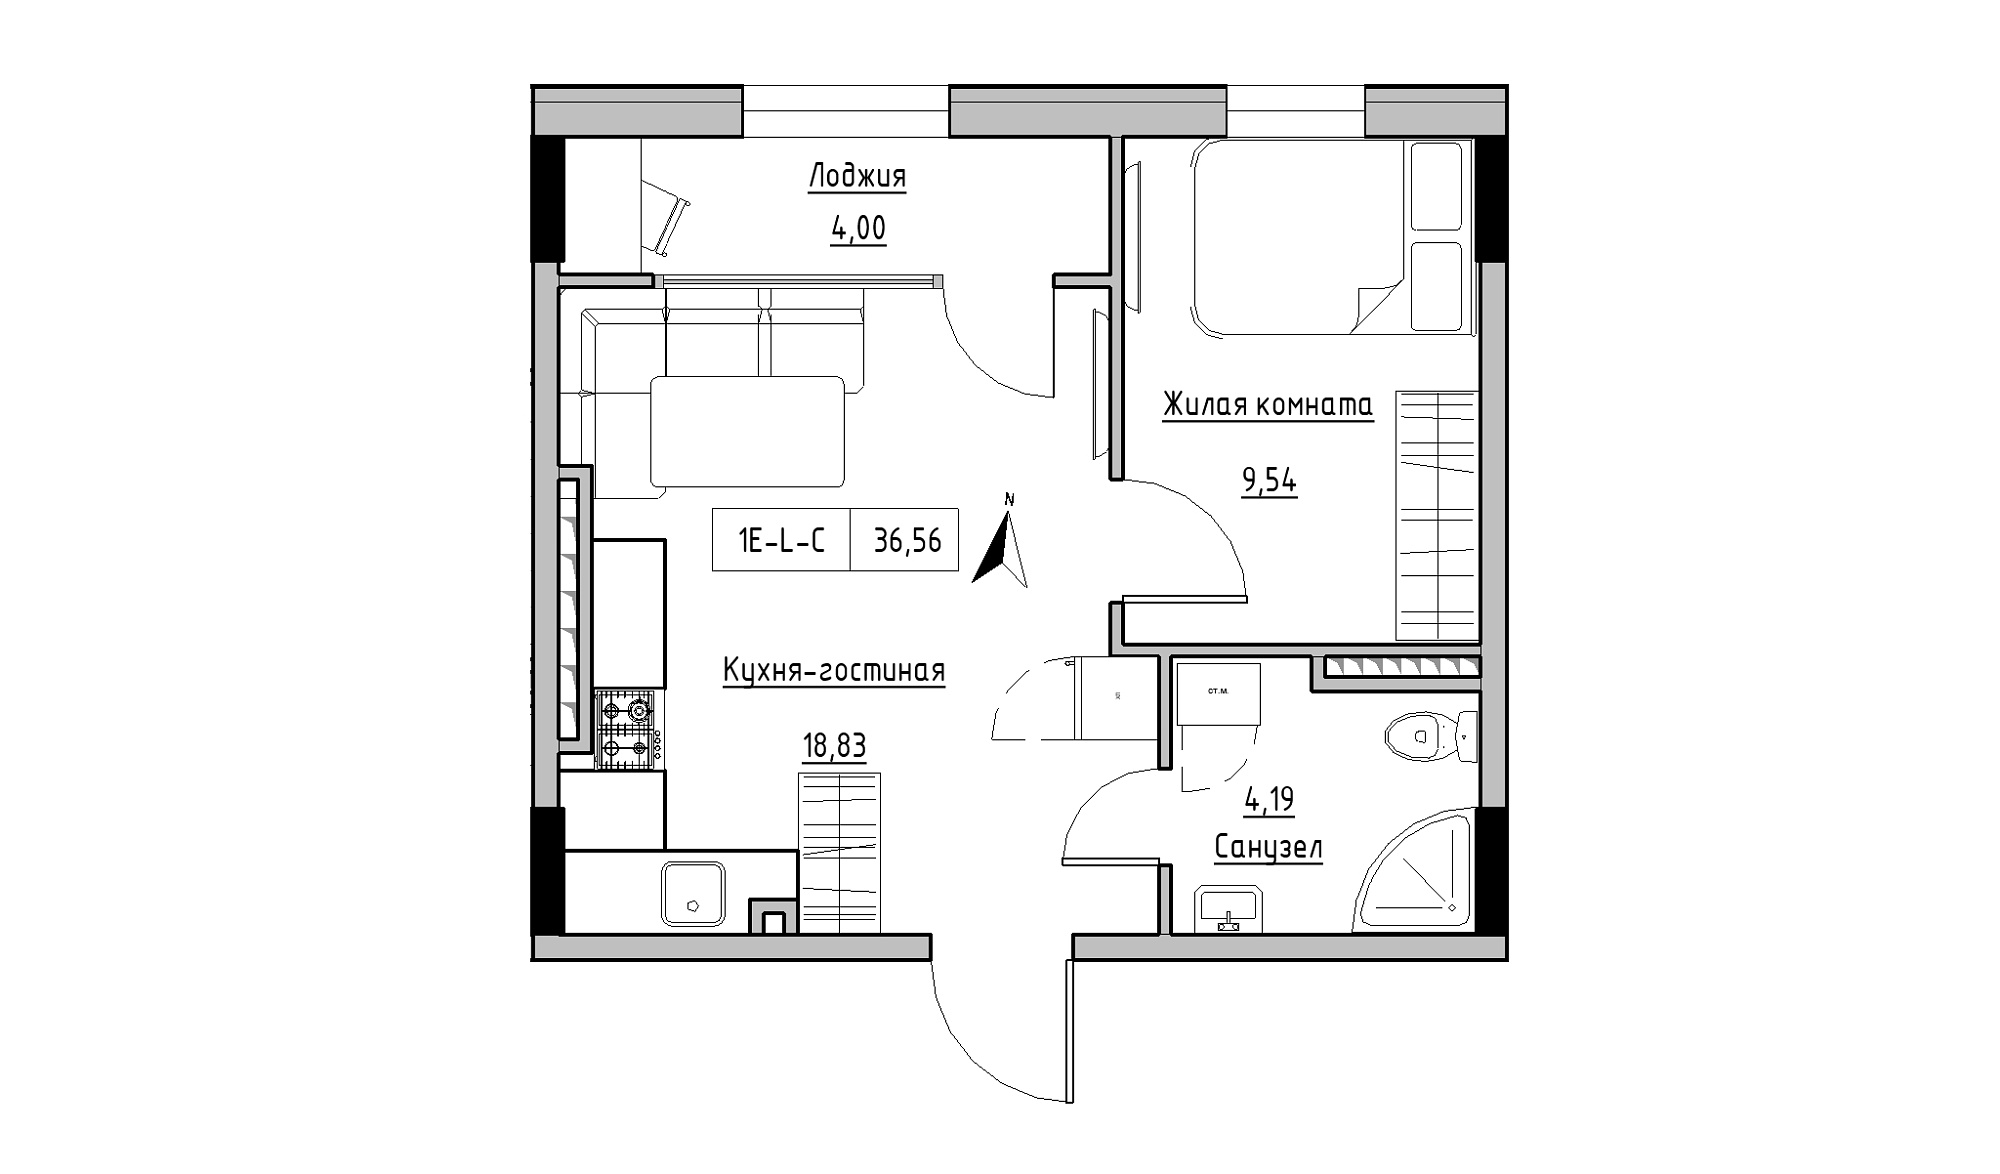 Planning 1-rm flats area 36.56m2, KS-025-06/0008.